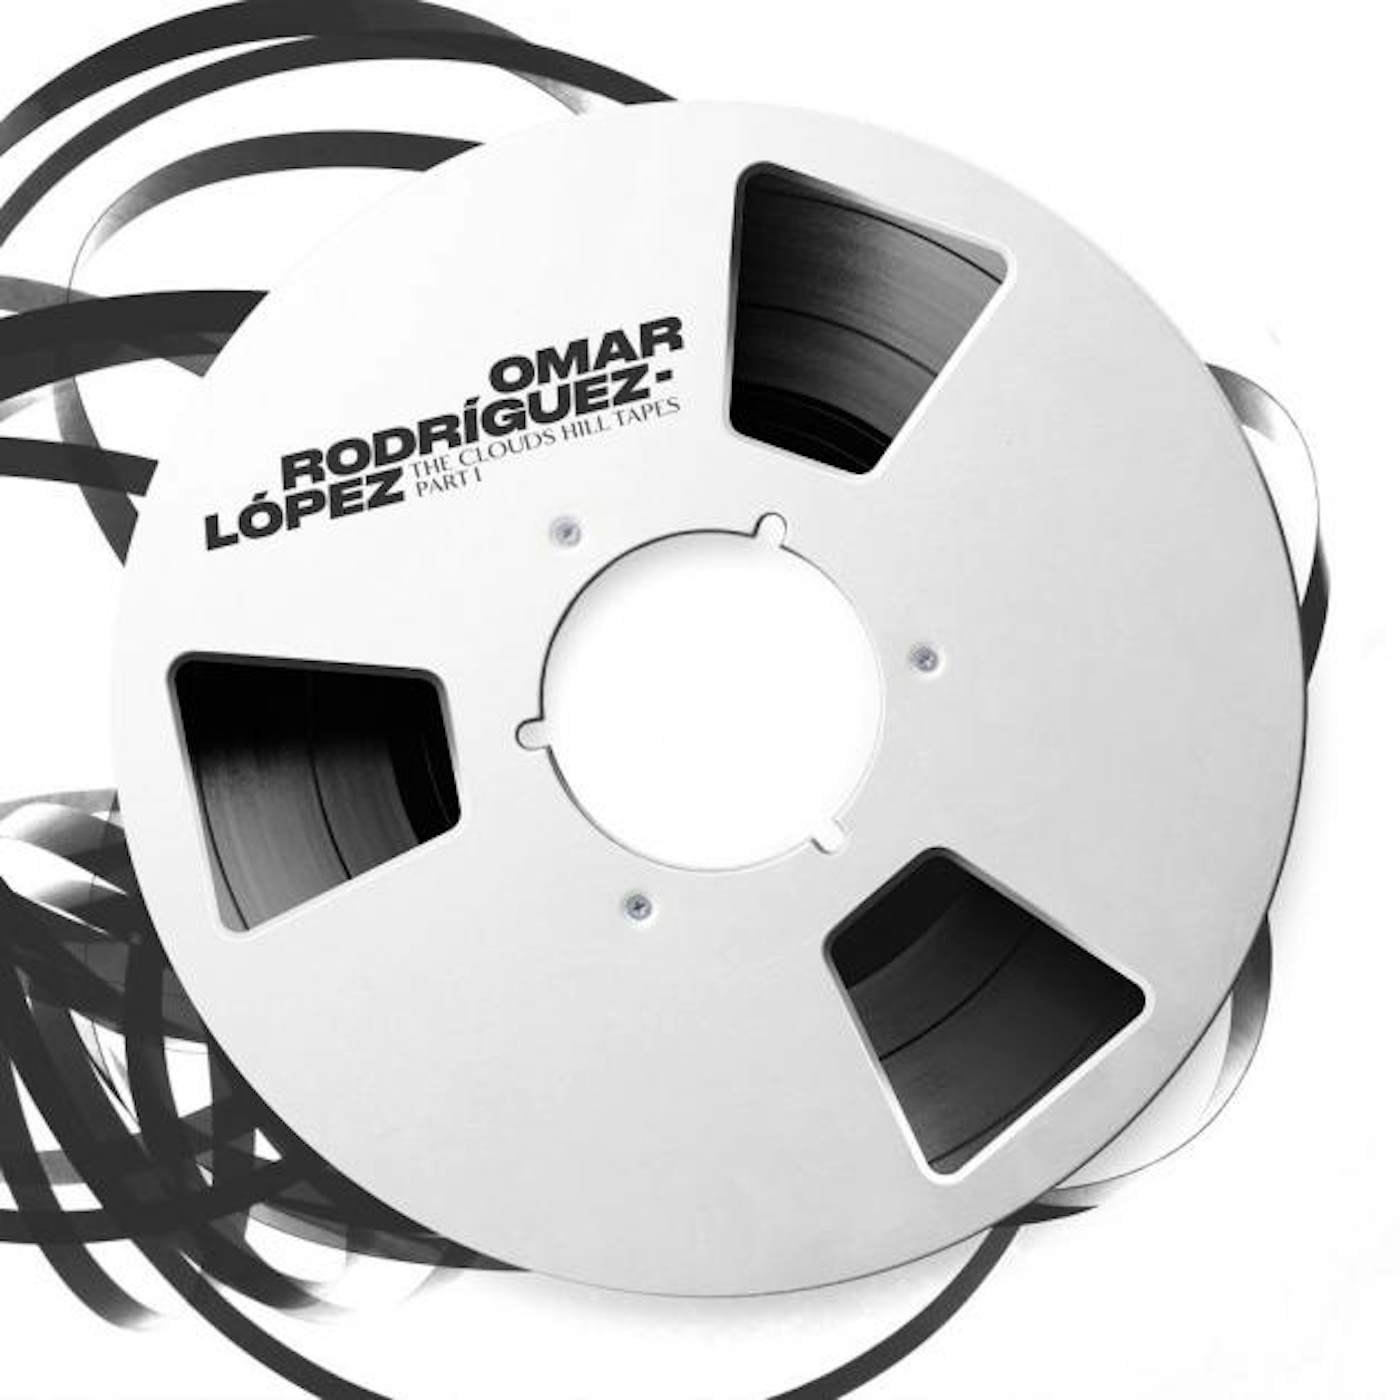 Omar Rodríguez-López CLOUDS HILL TAPES PT I, II & III Vinyl Record